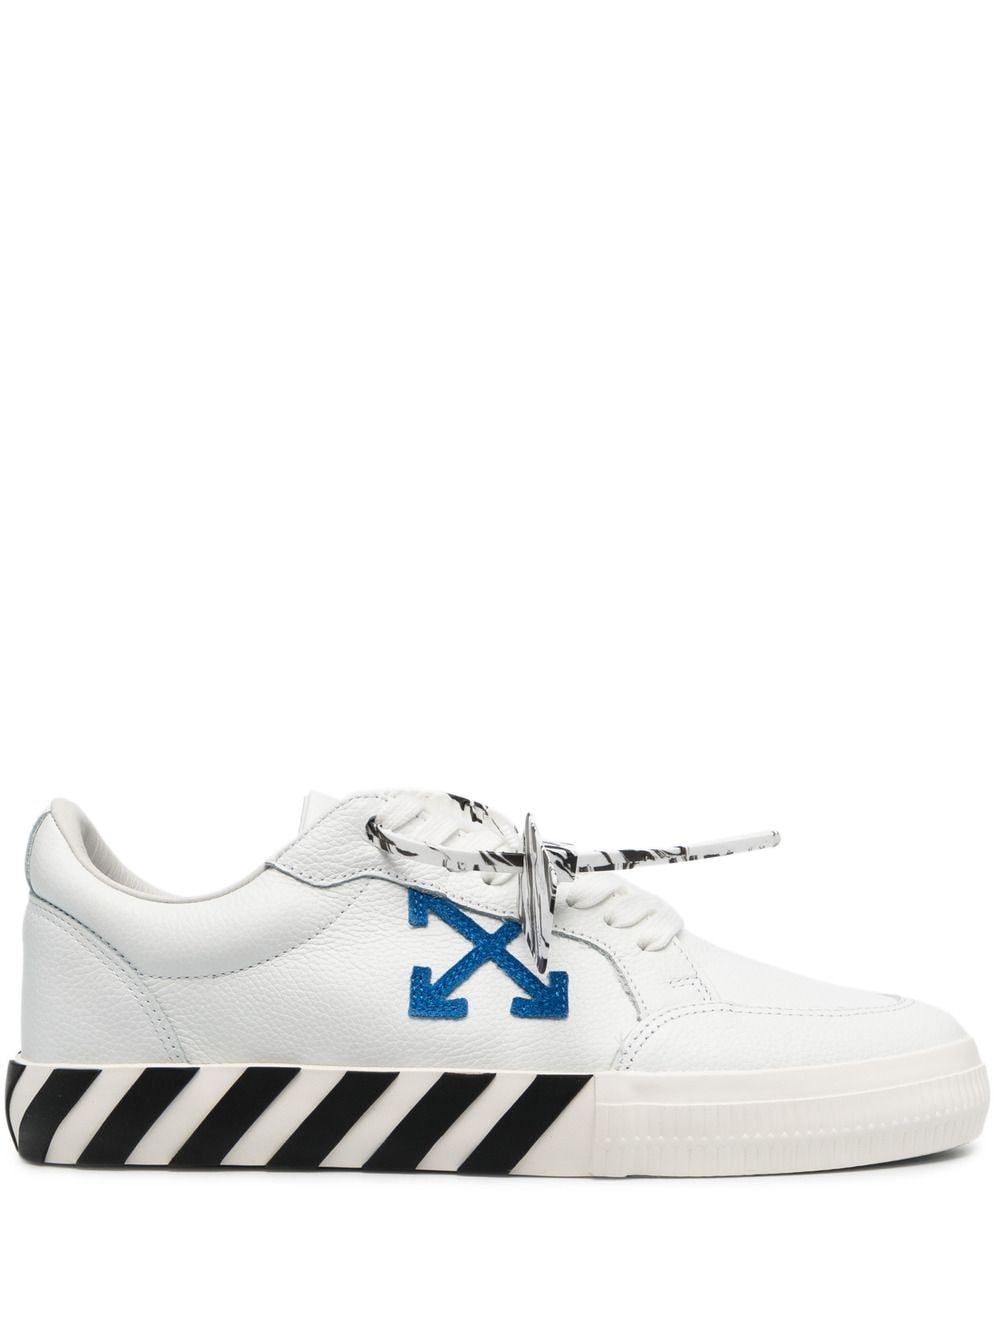 OFF-WHITE Low Vulcanized Sneakers White/Blue - MAISONDEFASHION.COM